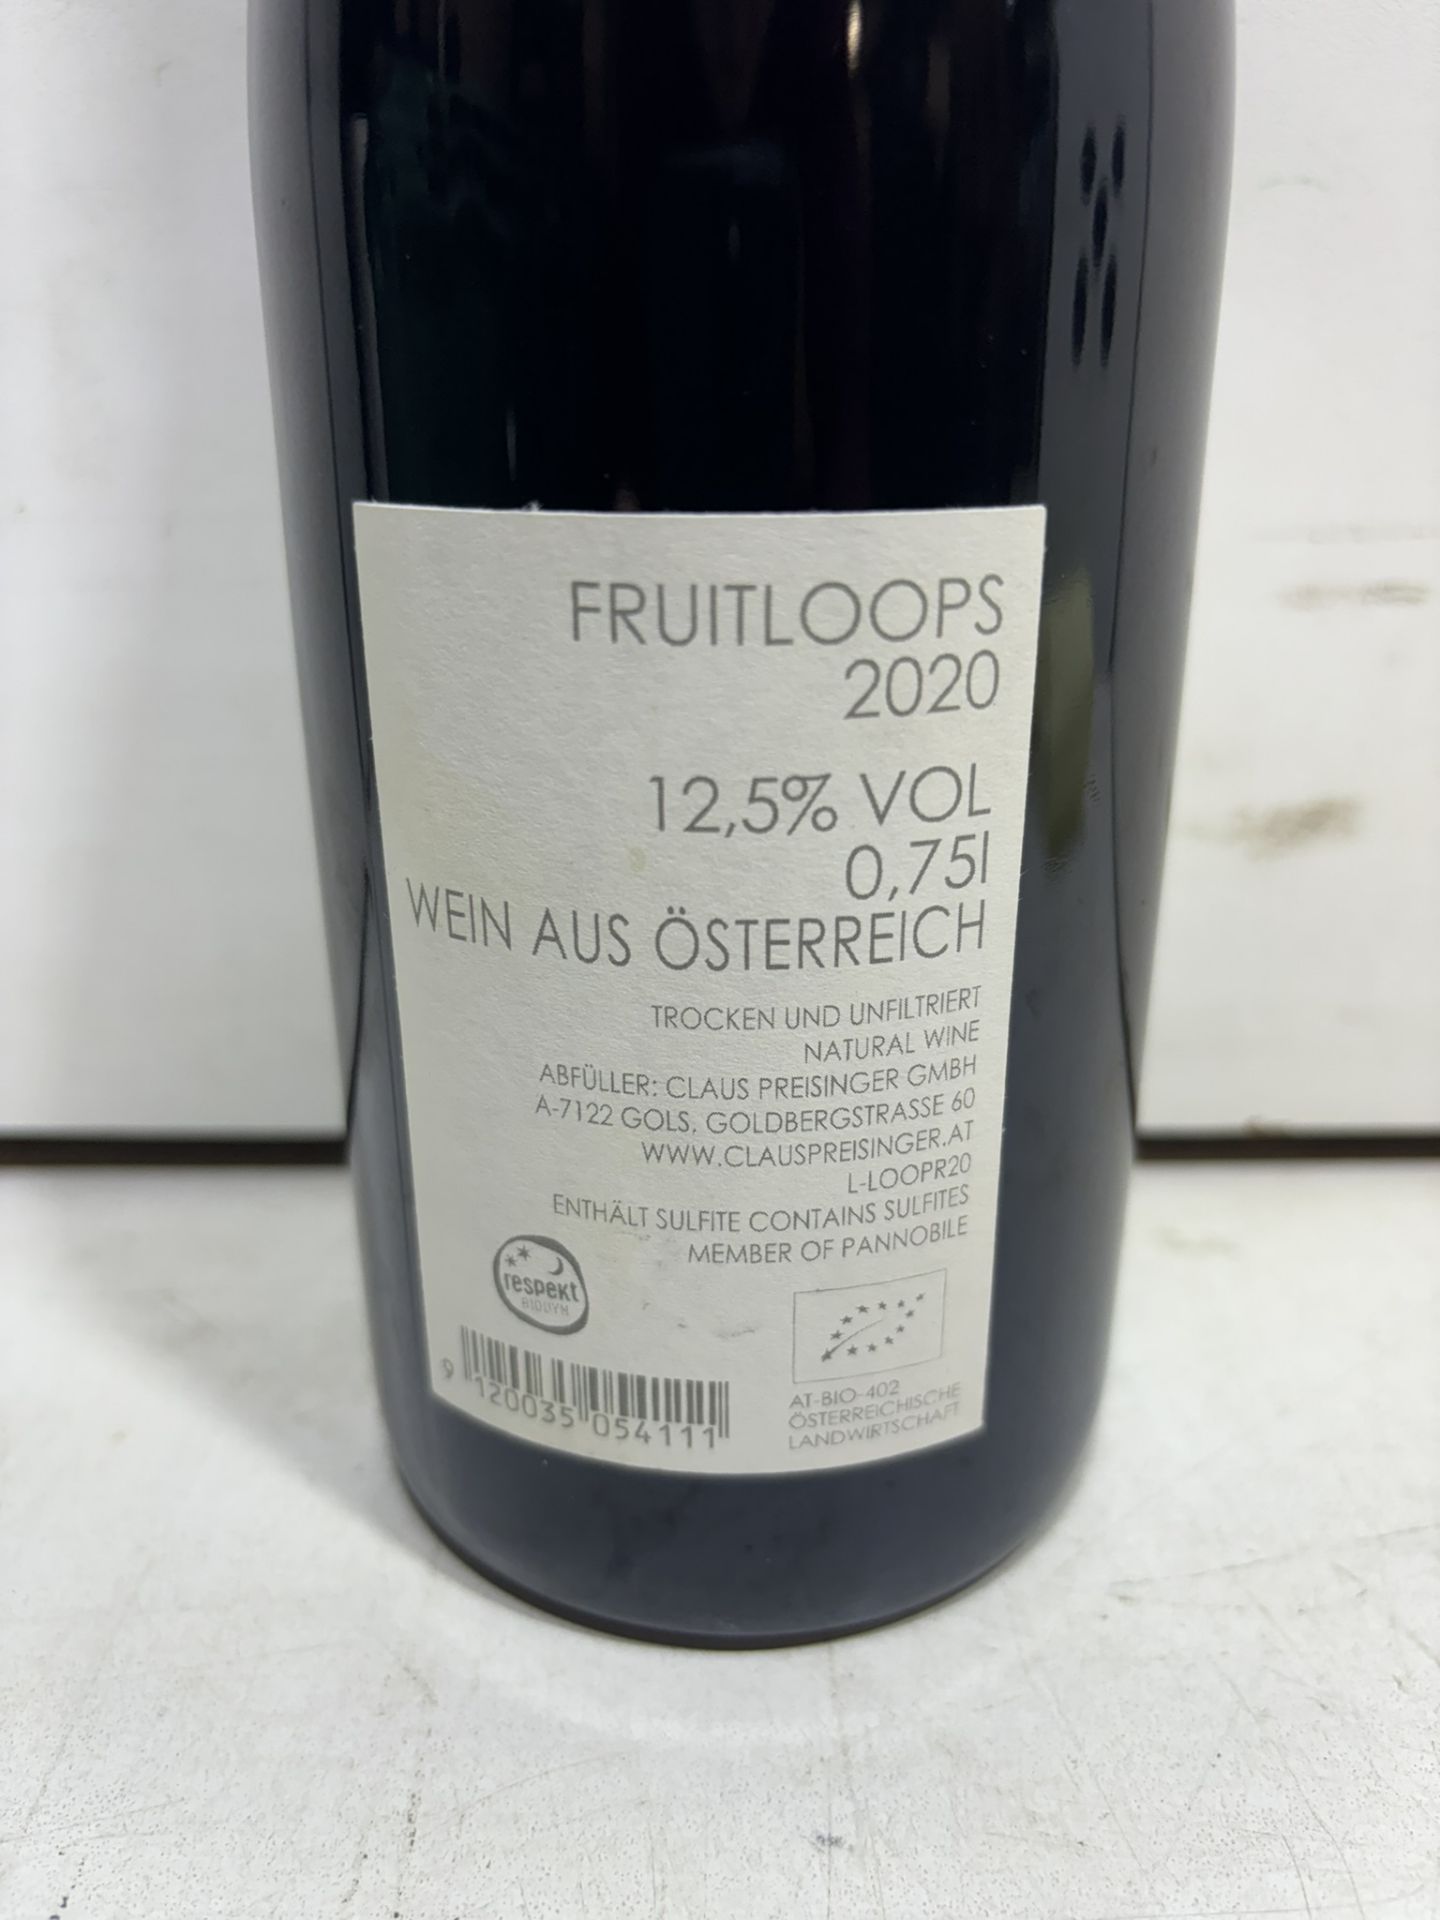 6 X Bottles Of Claus Preisinger 'Fruit Loops' Red Wine 75Cl - Image 3 of 4